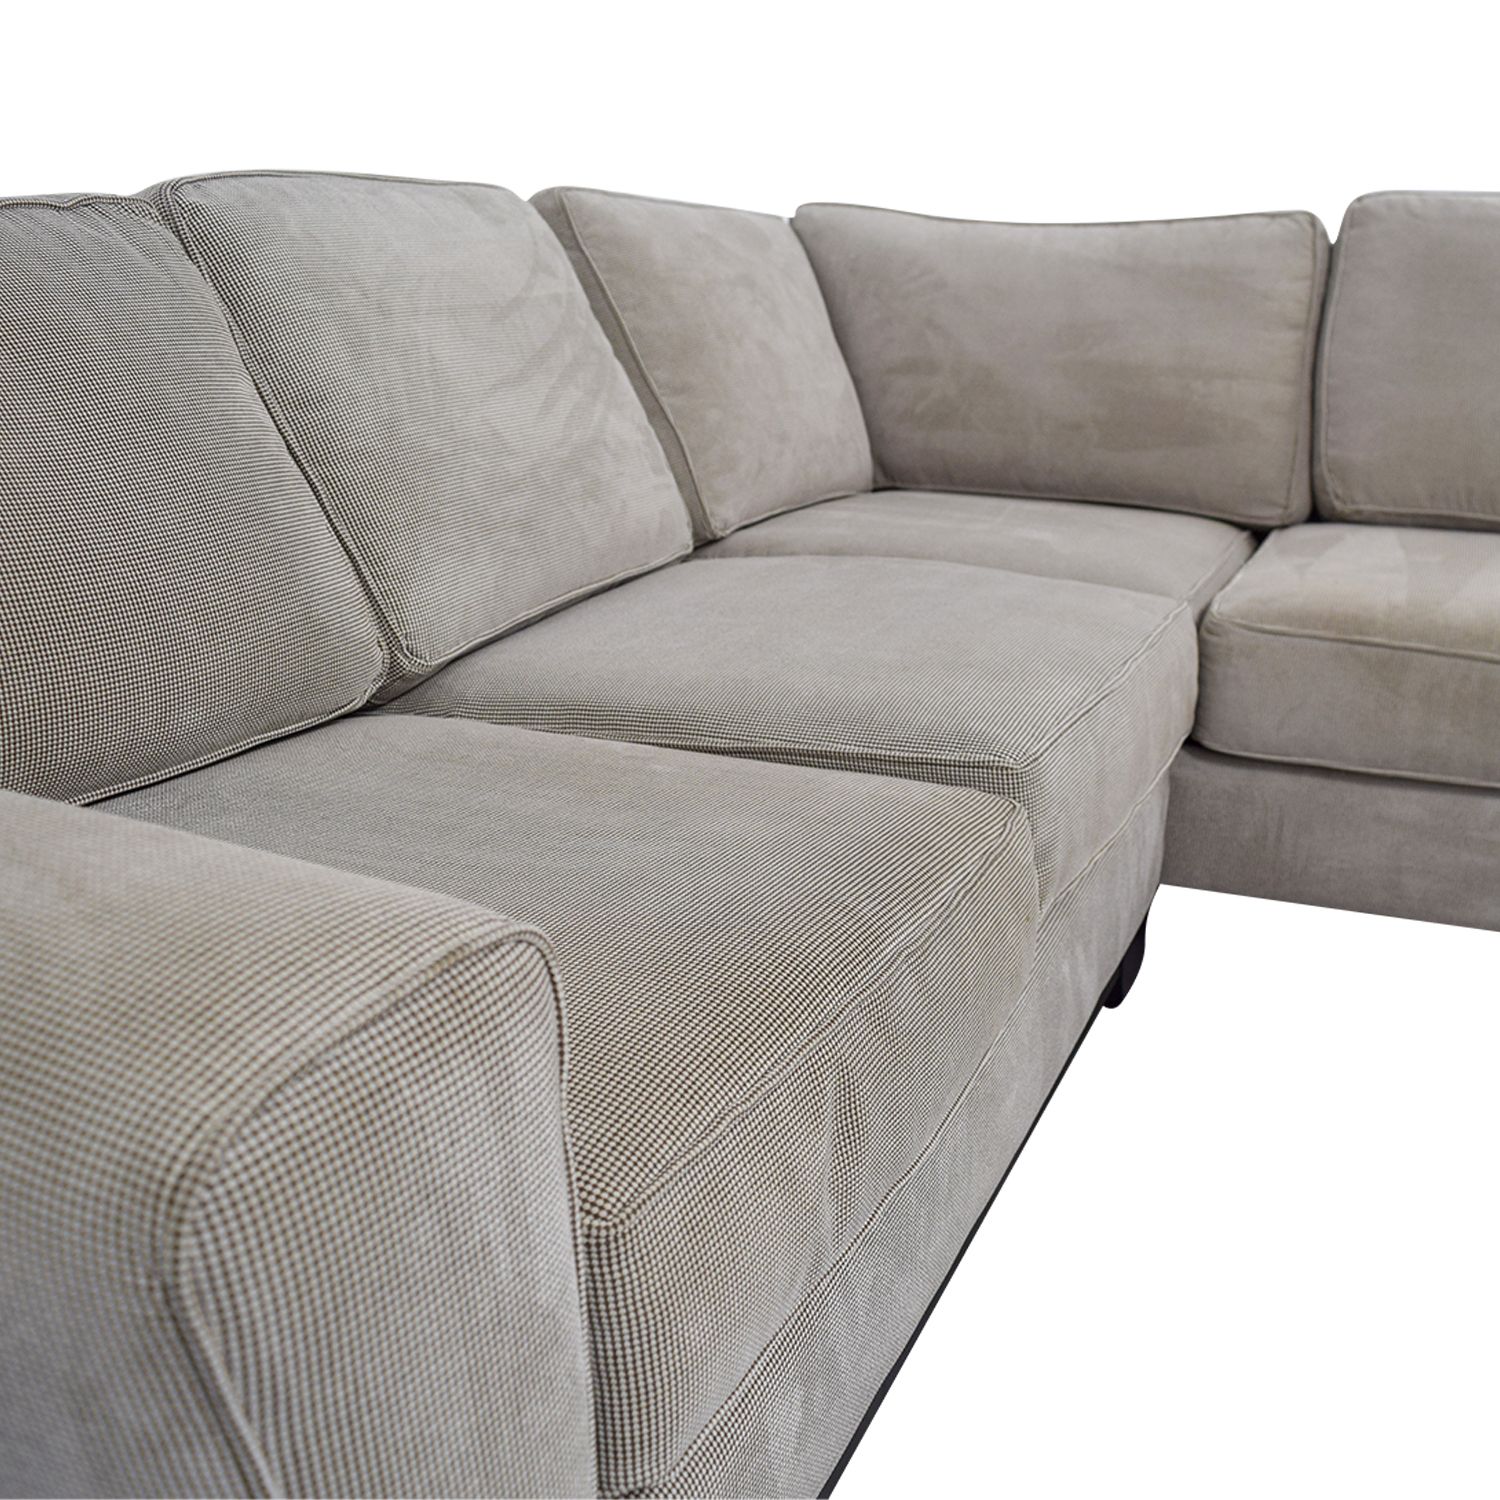 84% Off – Jordan's Furniture Jordan's Furniture Beige L Shaped In Beige L Shaped Sectional Sofas (View 8 of 20)